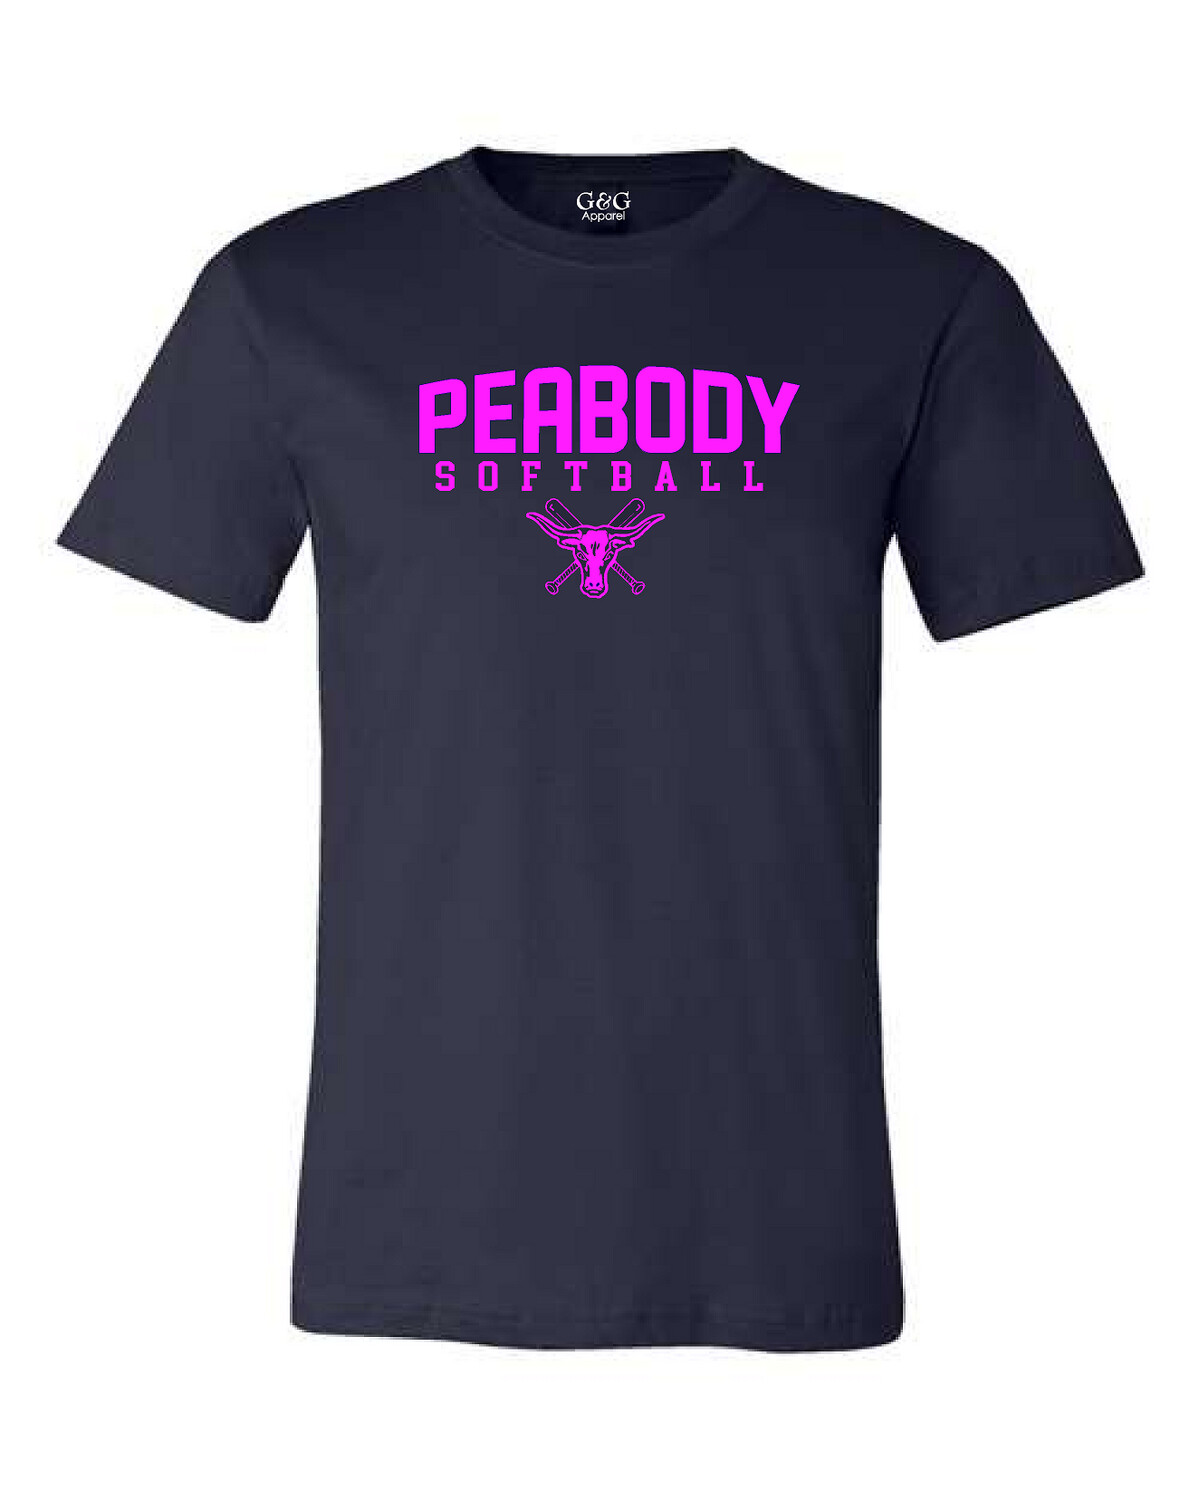 Unisex Youth & Adult 50/50 Dri-Power Peabody Pink Softball T-Shirt 1.0